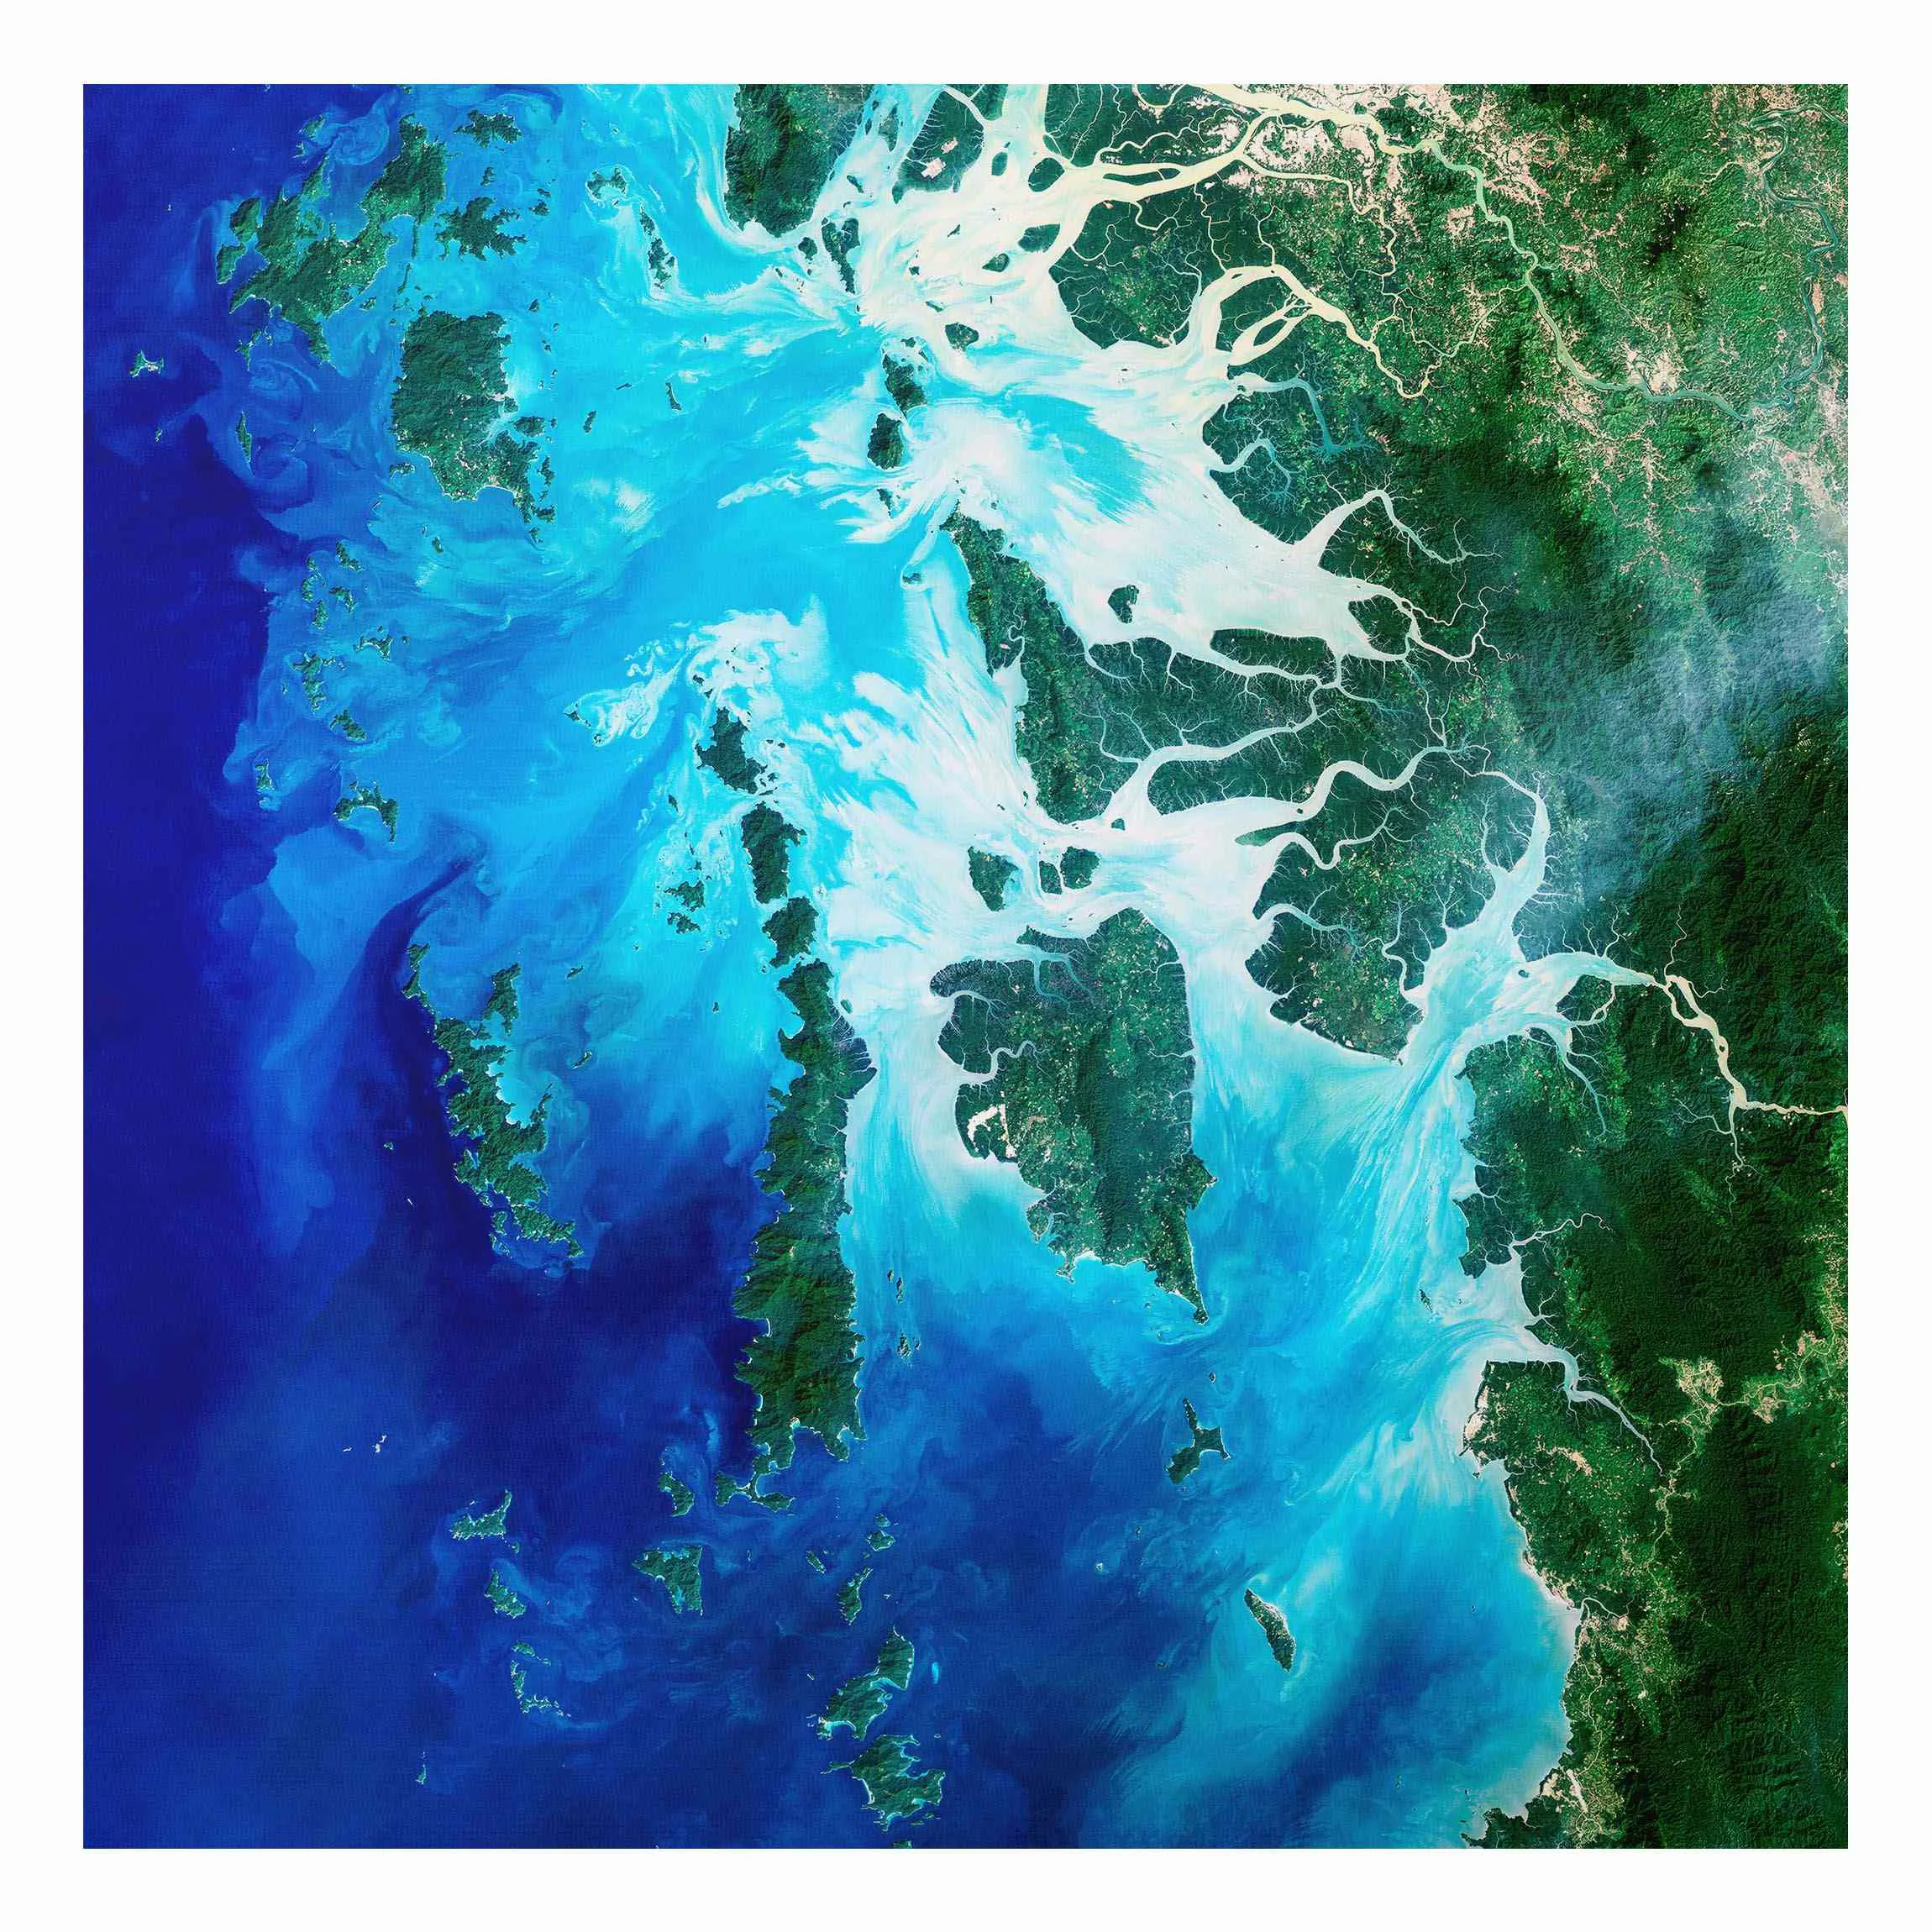 Alu-Dibond Bild NASA Fotografie Archipel Südostasien günstig online kaufen